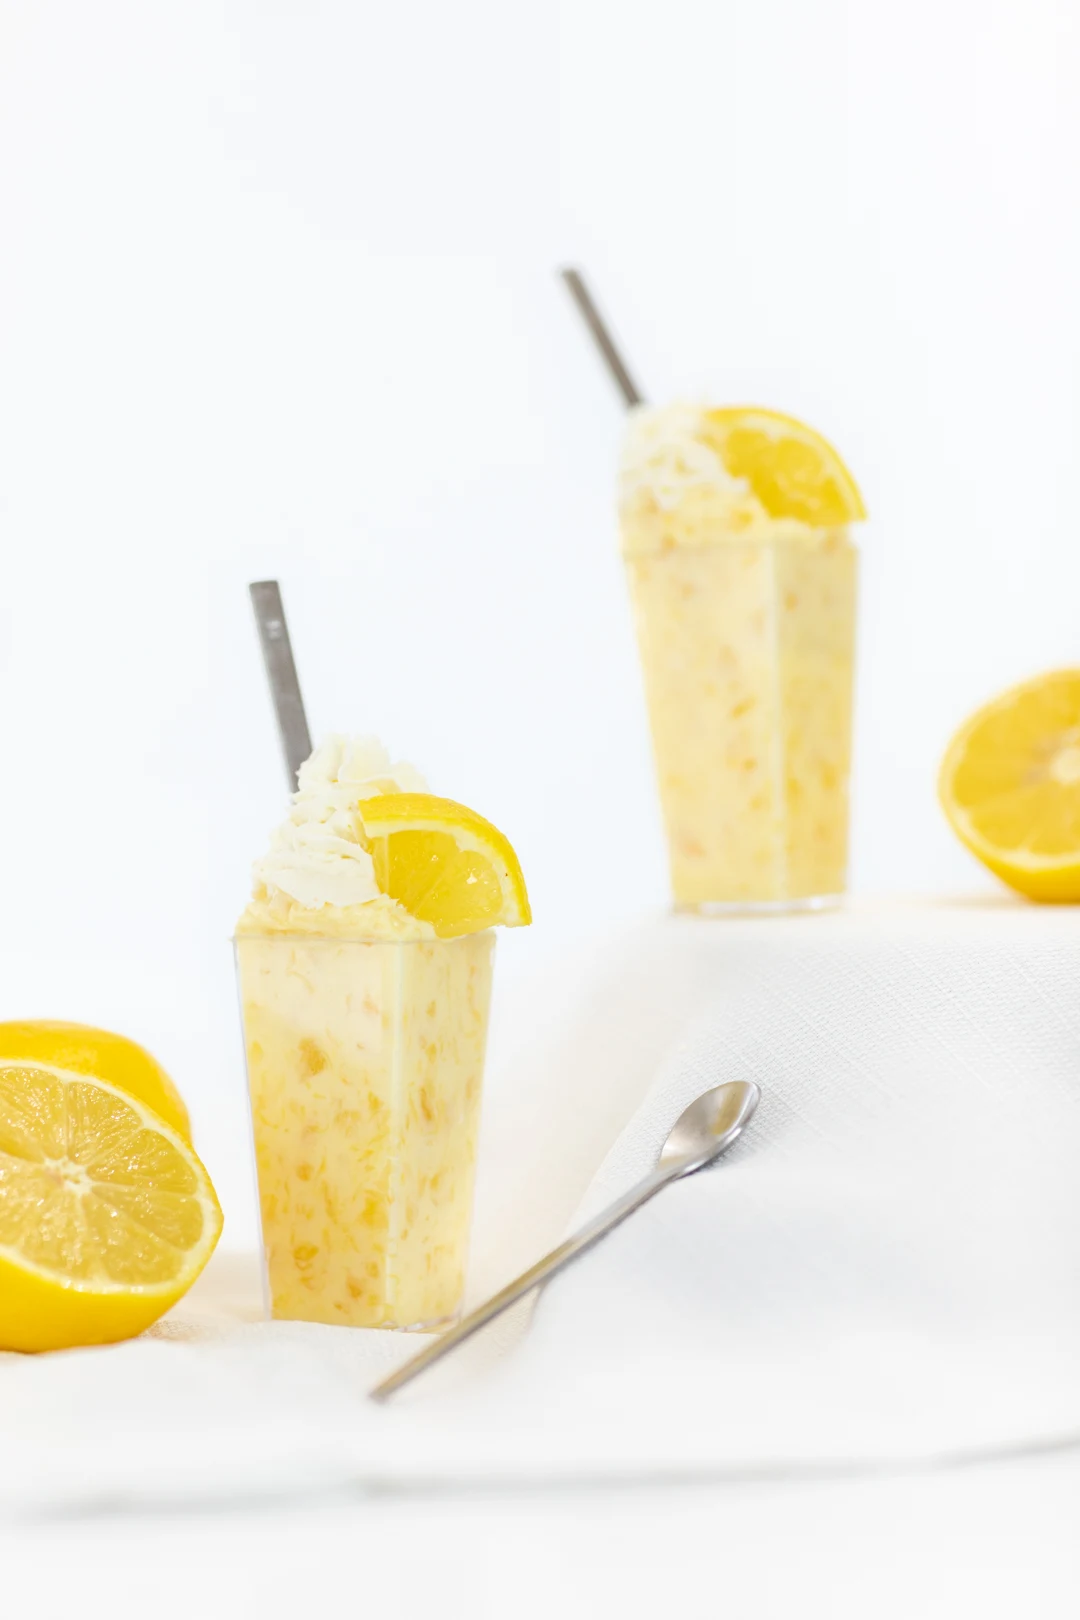 Delish Lemon and Pineapple Dessert Parfait topped with Fresh Lemon Wedges